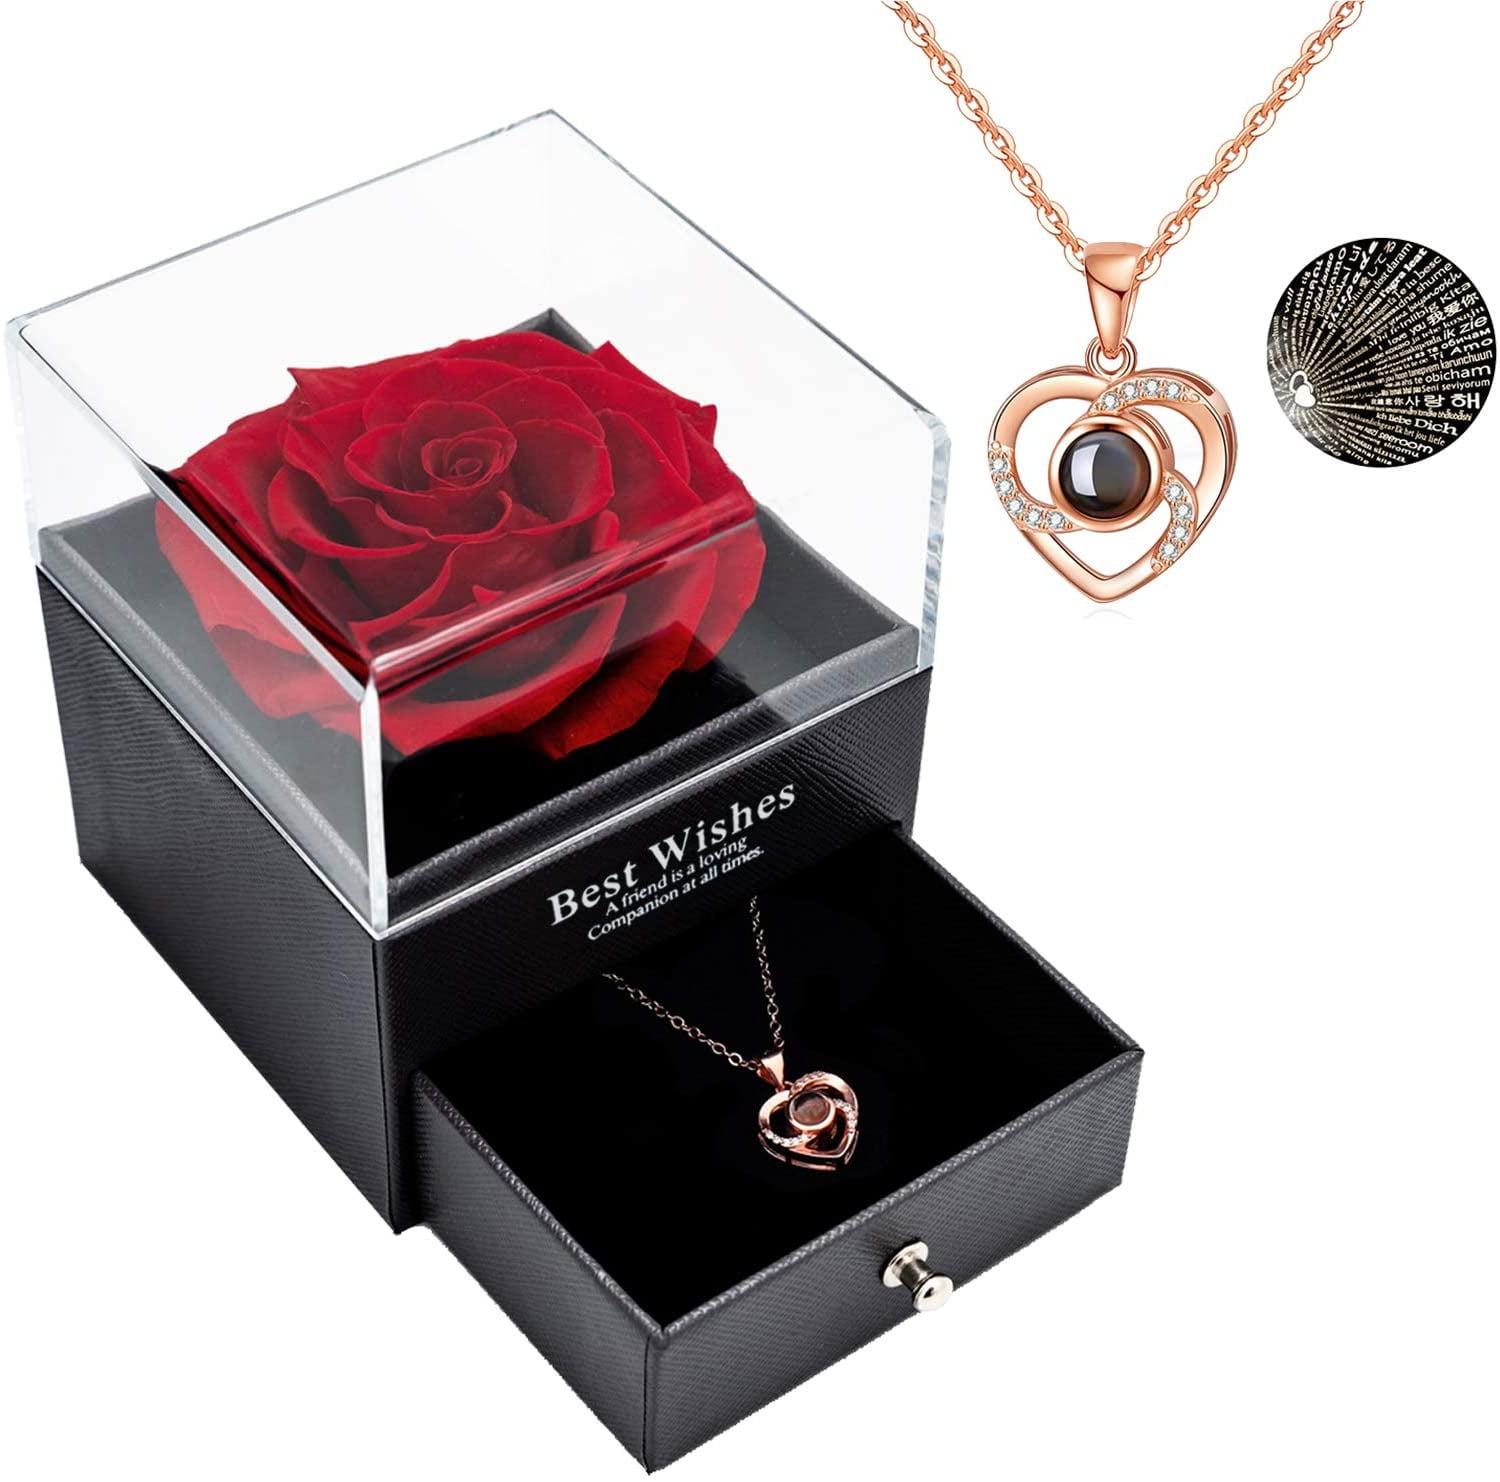 Silver handmade jewelry sets Rose flowers Necklace earring pendants jewelry 